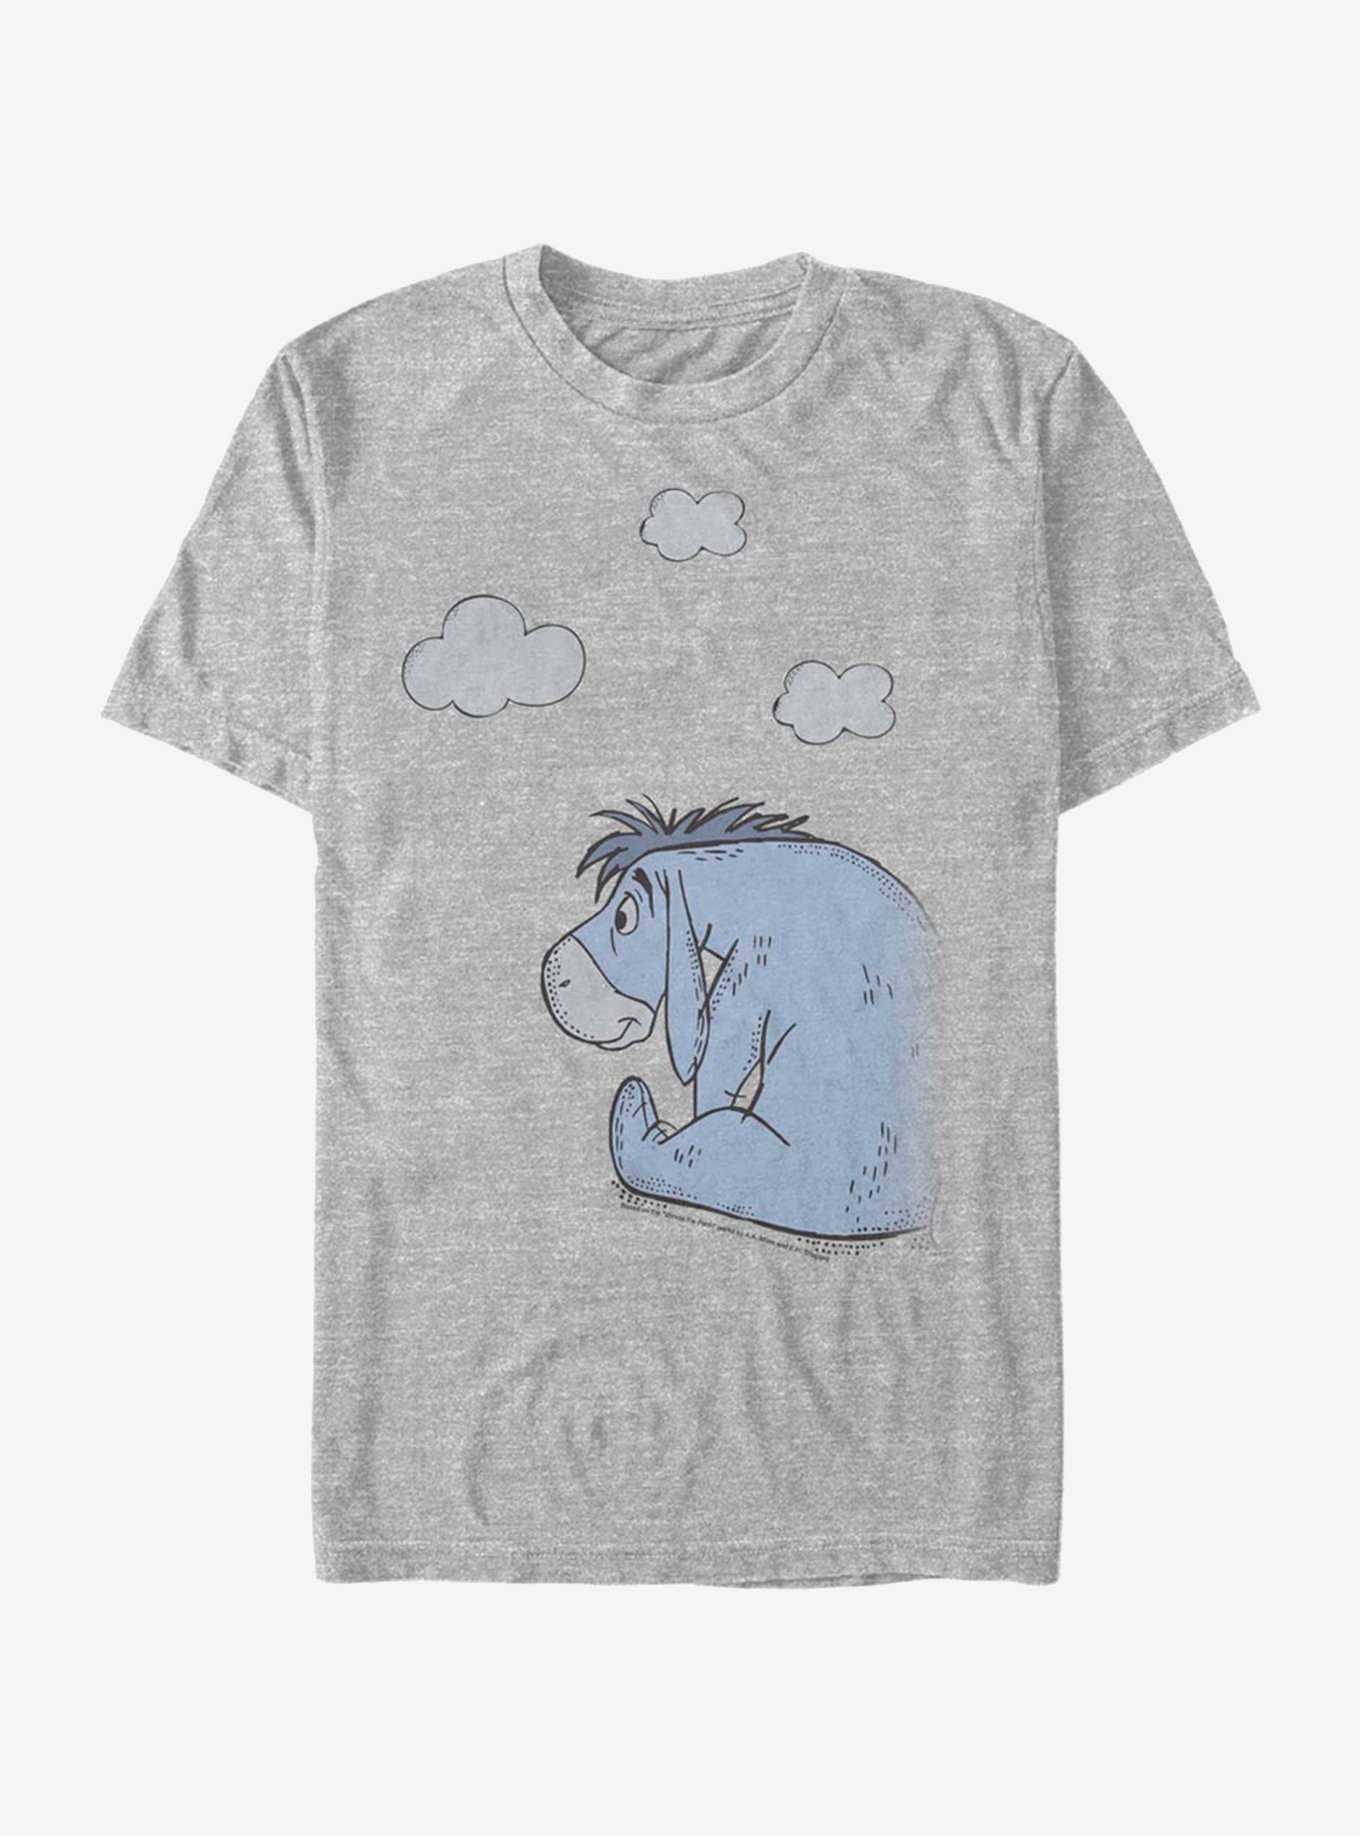 Disney Winnie The Pooh Cloudy Eeyore T-Shirt, , hi-res